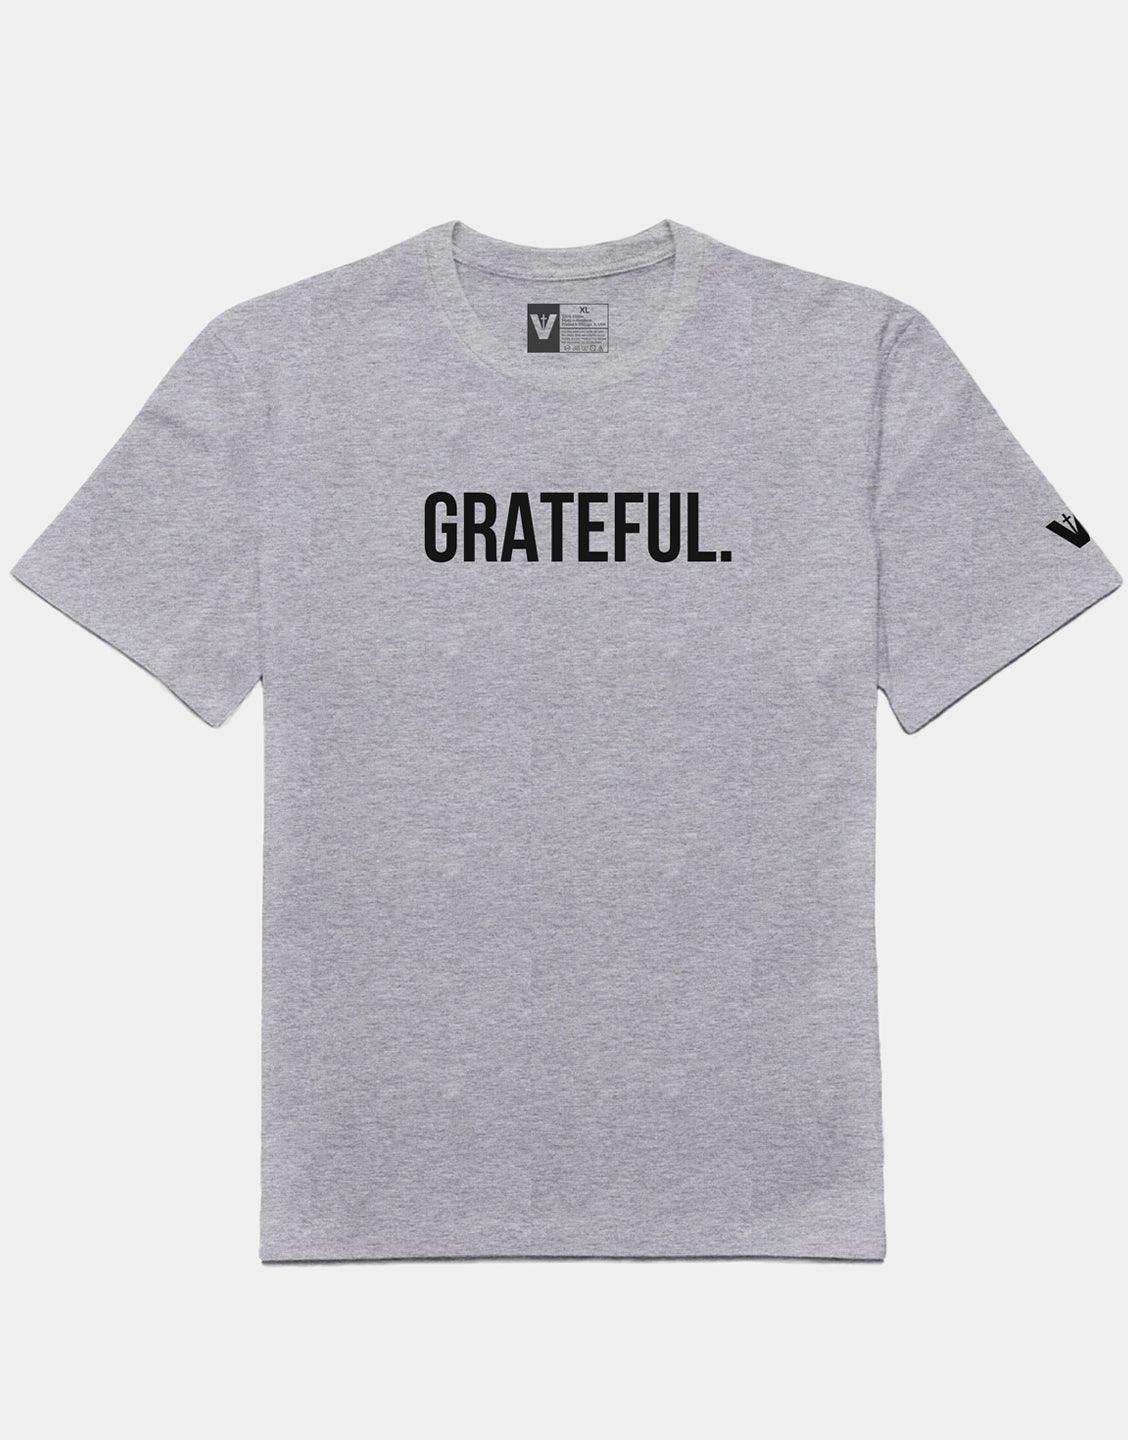 Grateful Tee (Black on Grey) - VOTC Clothing